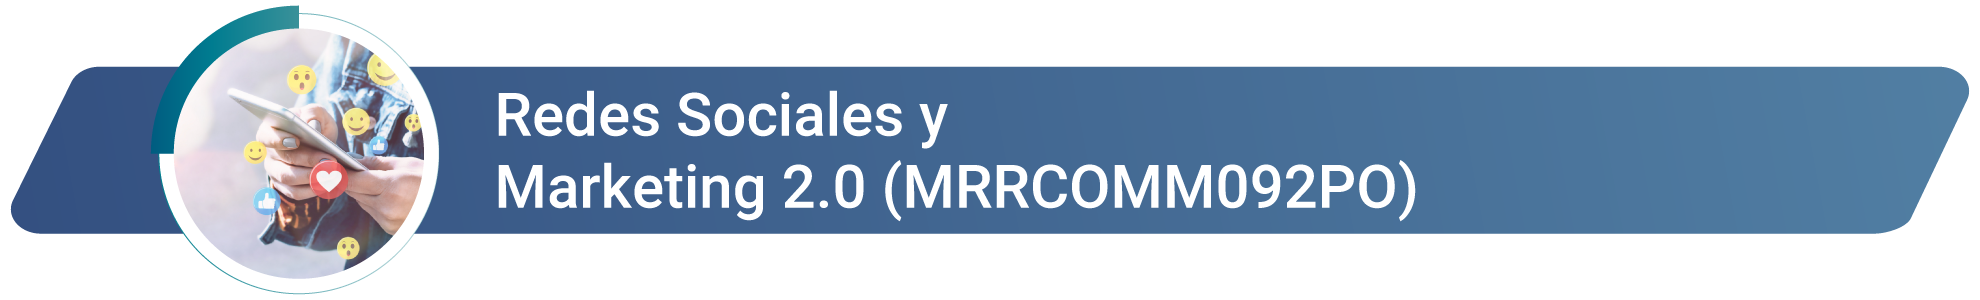 MRRCOMM092PO - Redes Sociales y Marketing 2.0